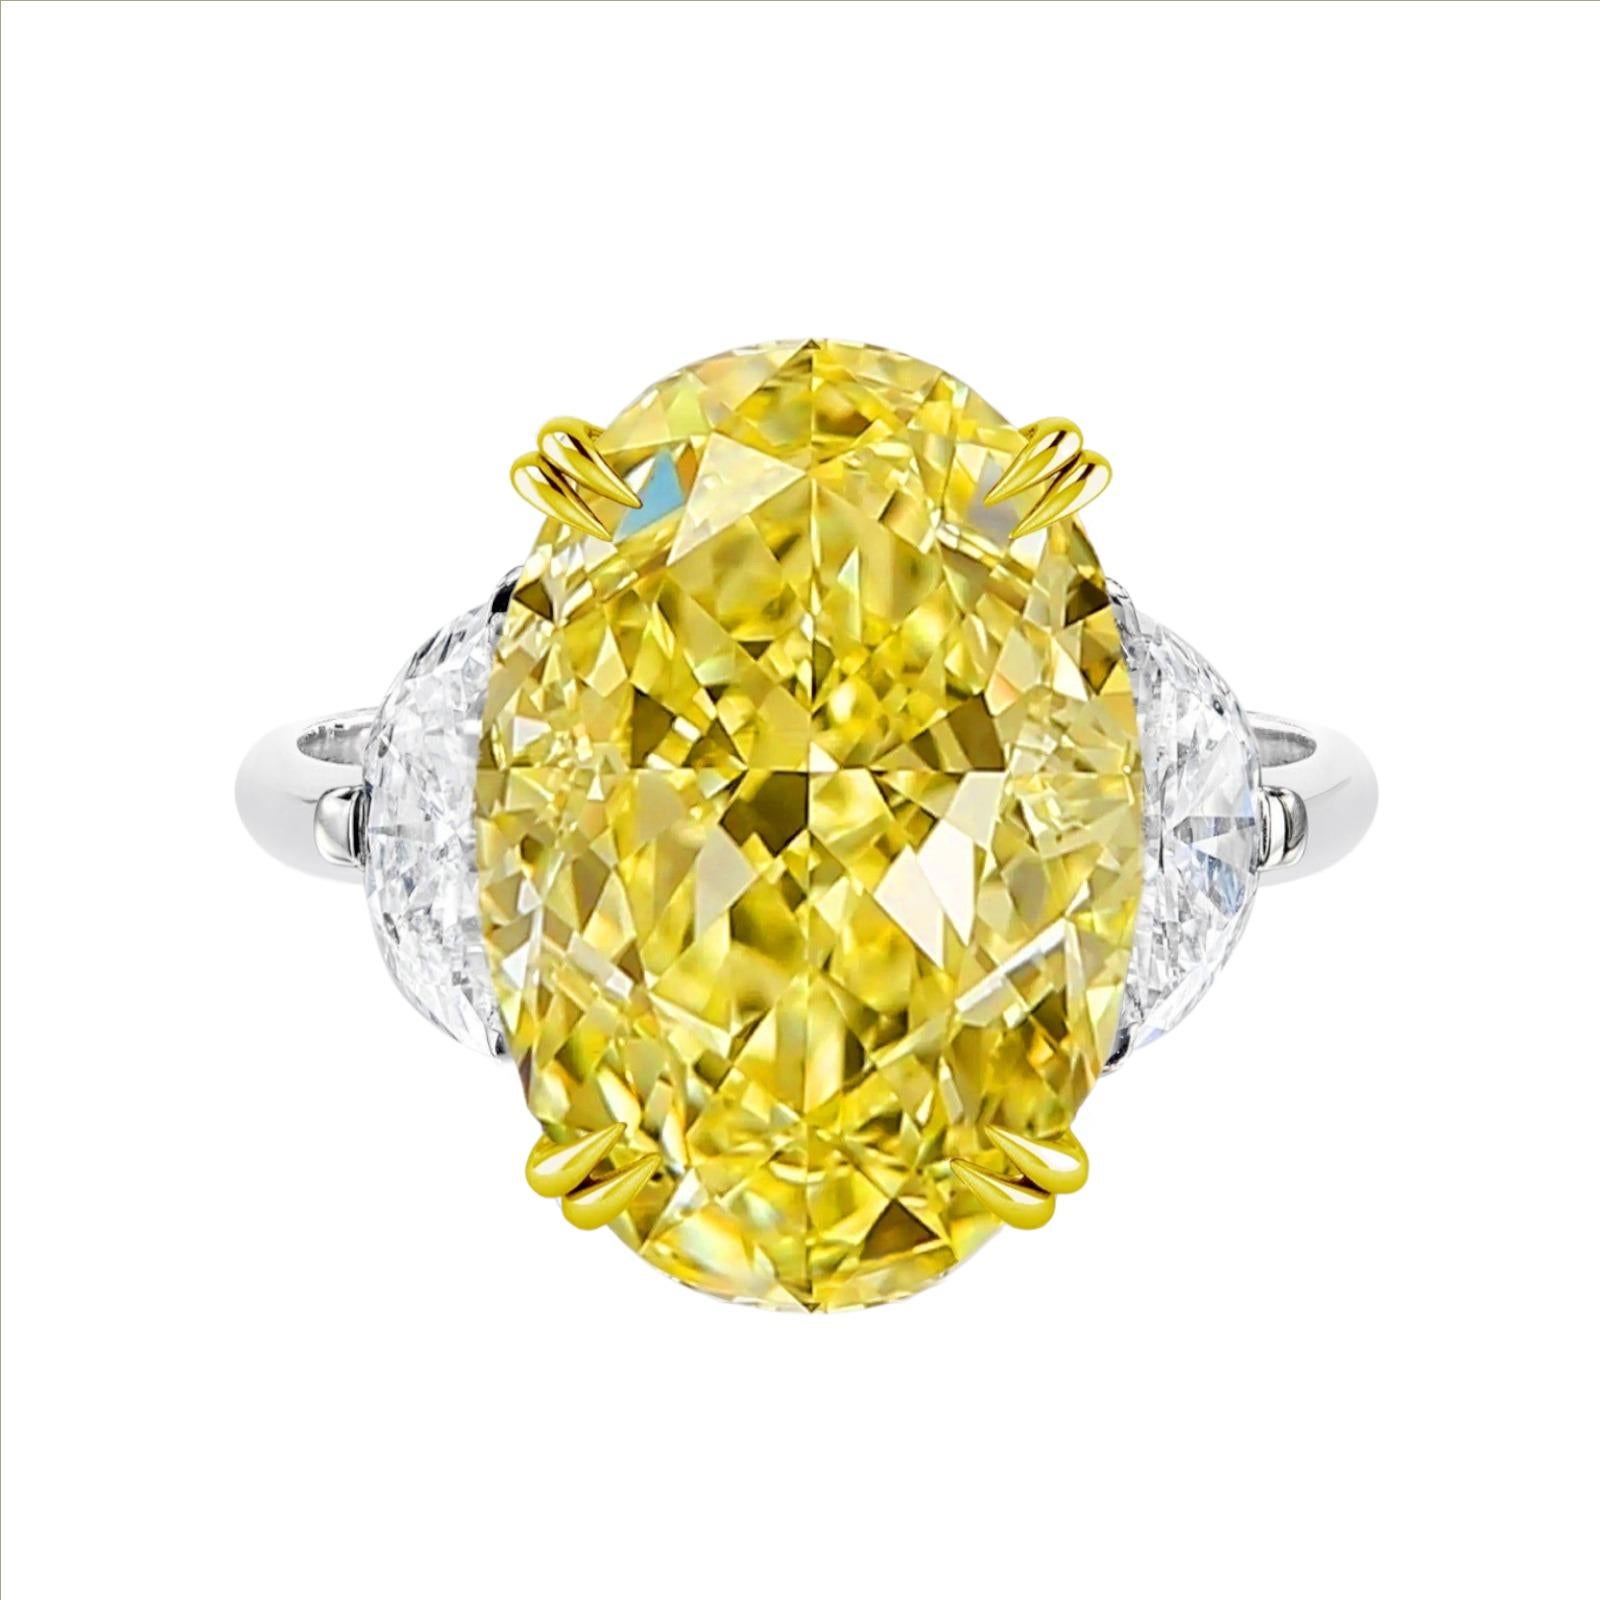 Oval Cut GIA Certified 5.36 Carat Fancy Intense Yellow Internally Flawless Diamond Ring For Sale